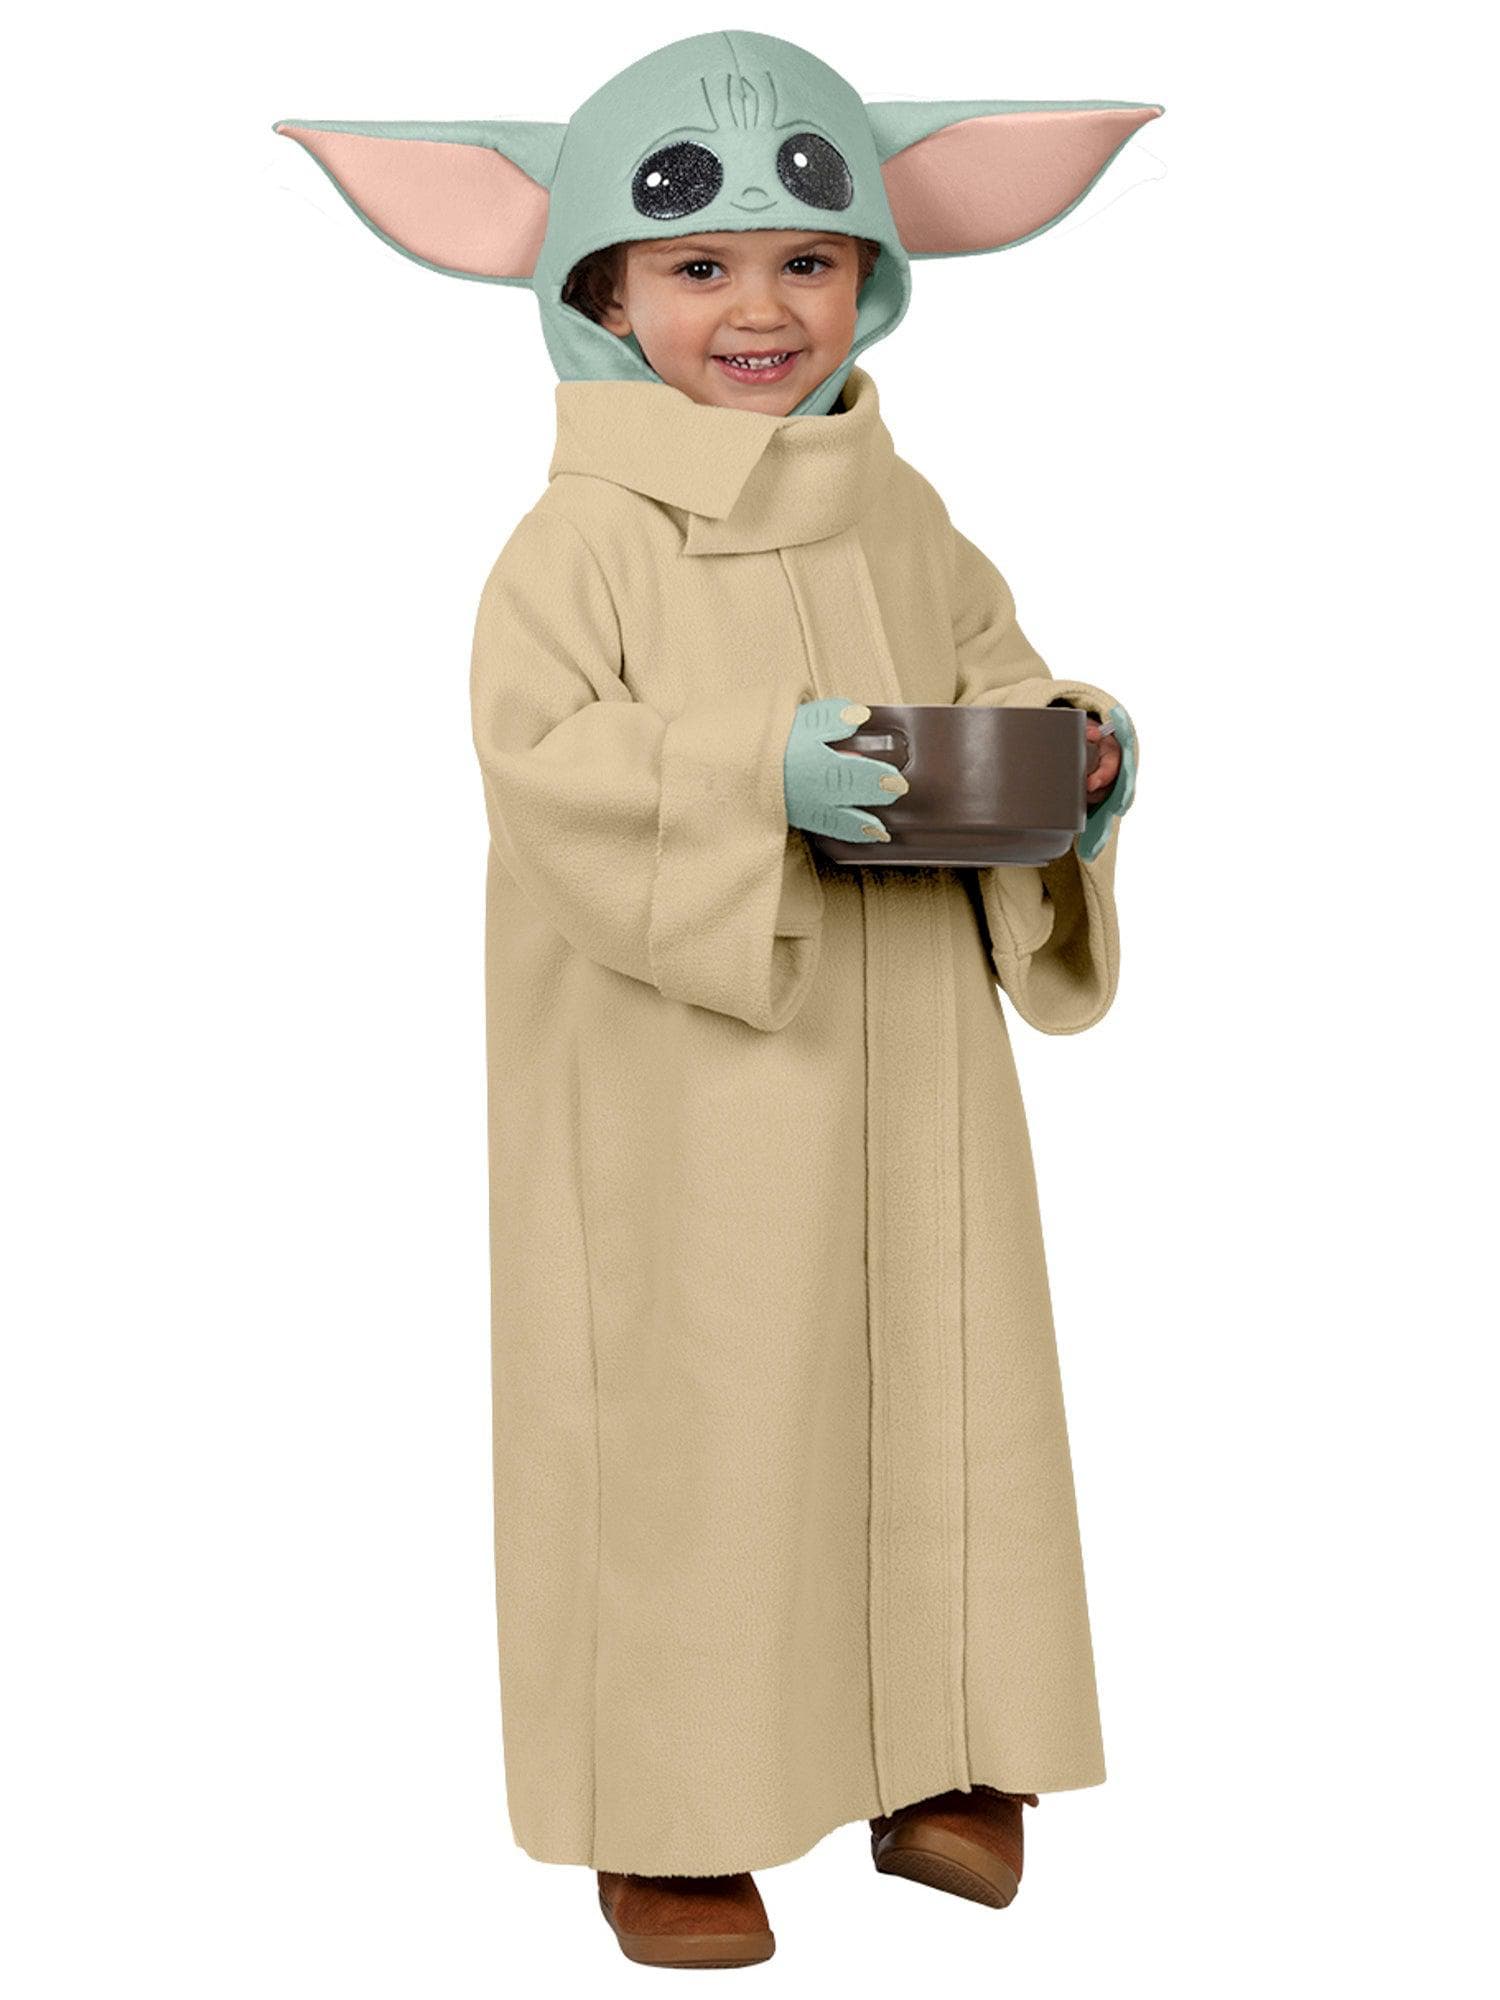 The Child Toddler Costume - costumes.com